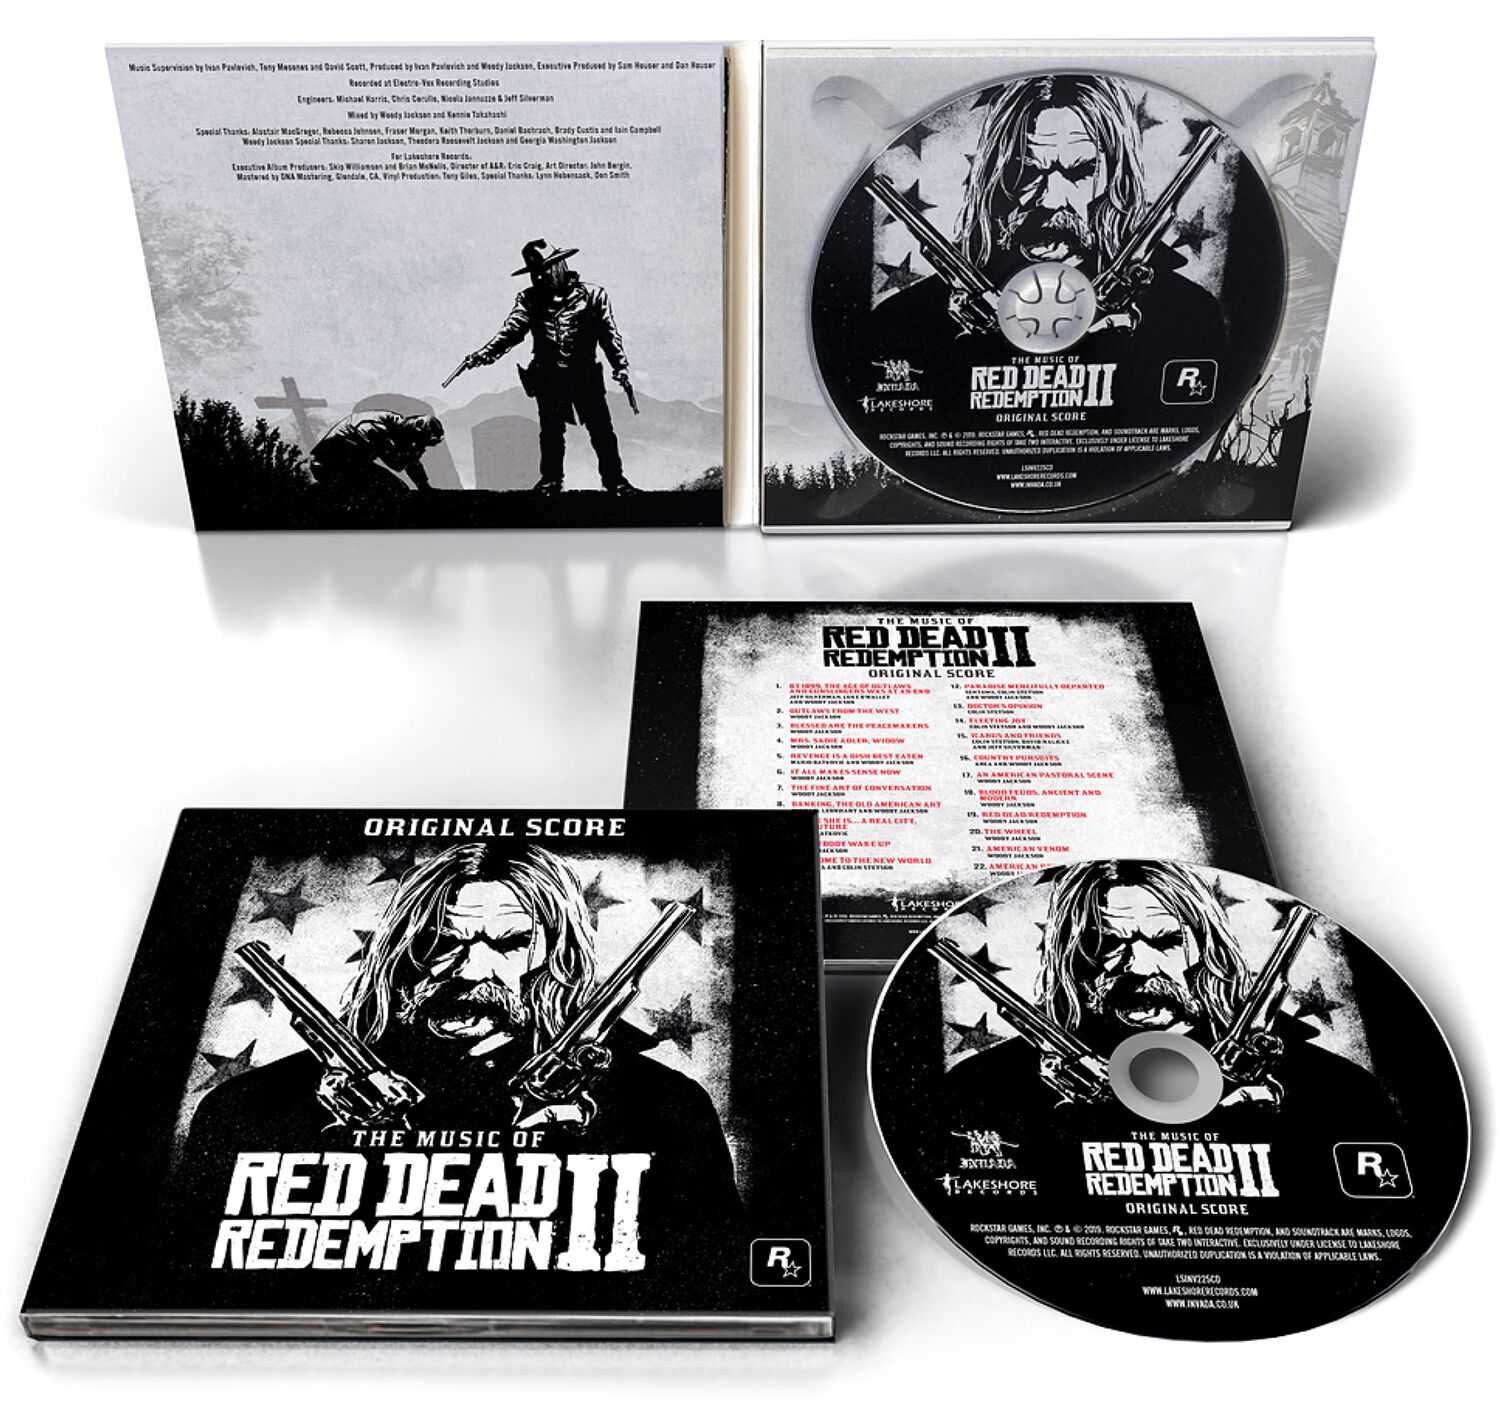 The music of Red Dead Redemption II - Original Score von Red Dead Redemption - CD (Digipak, Limited Edition)